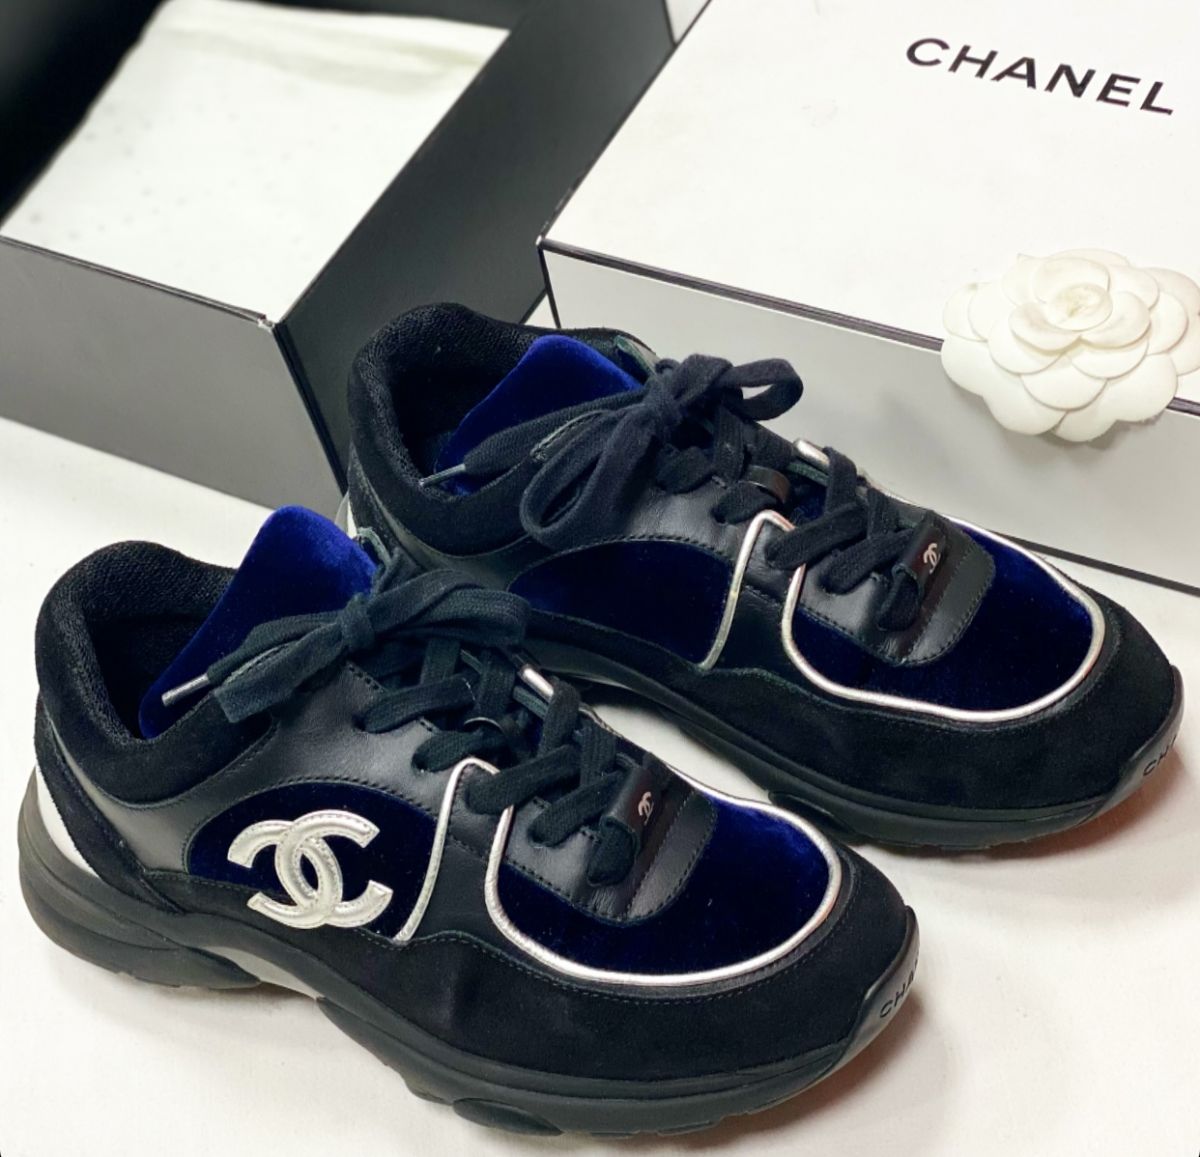 Кроссовки Chanel размер 36 цена 23 078 руб 